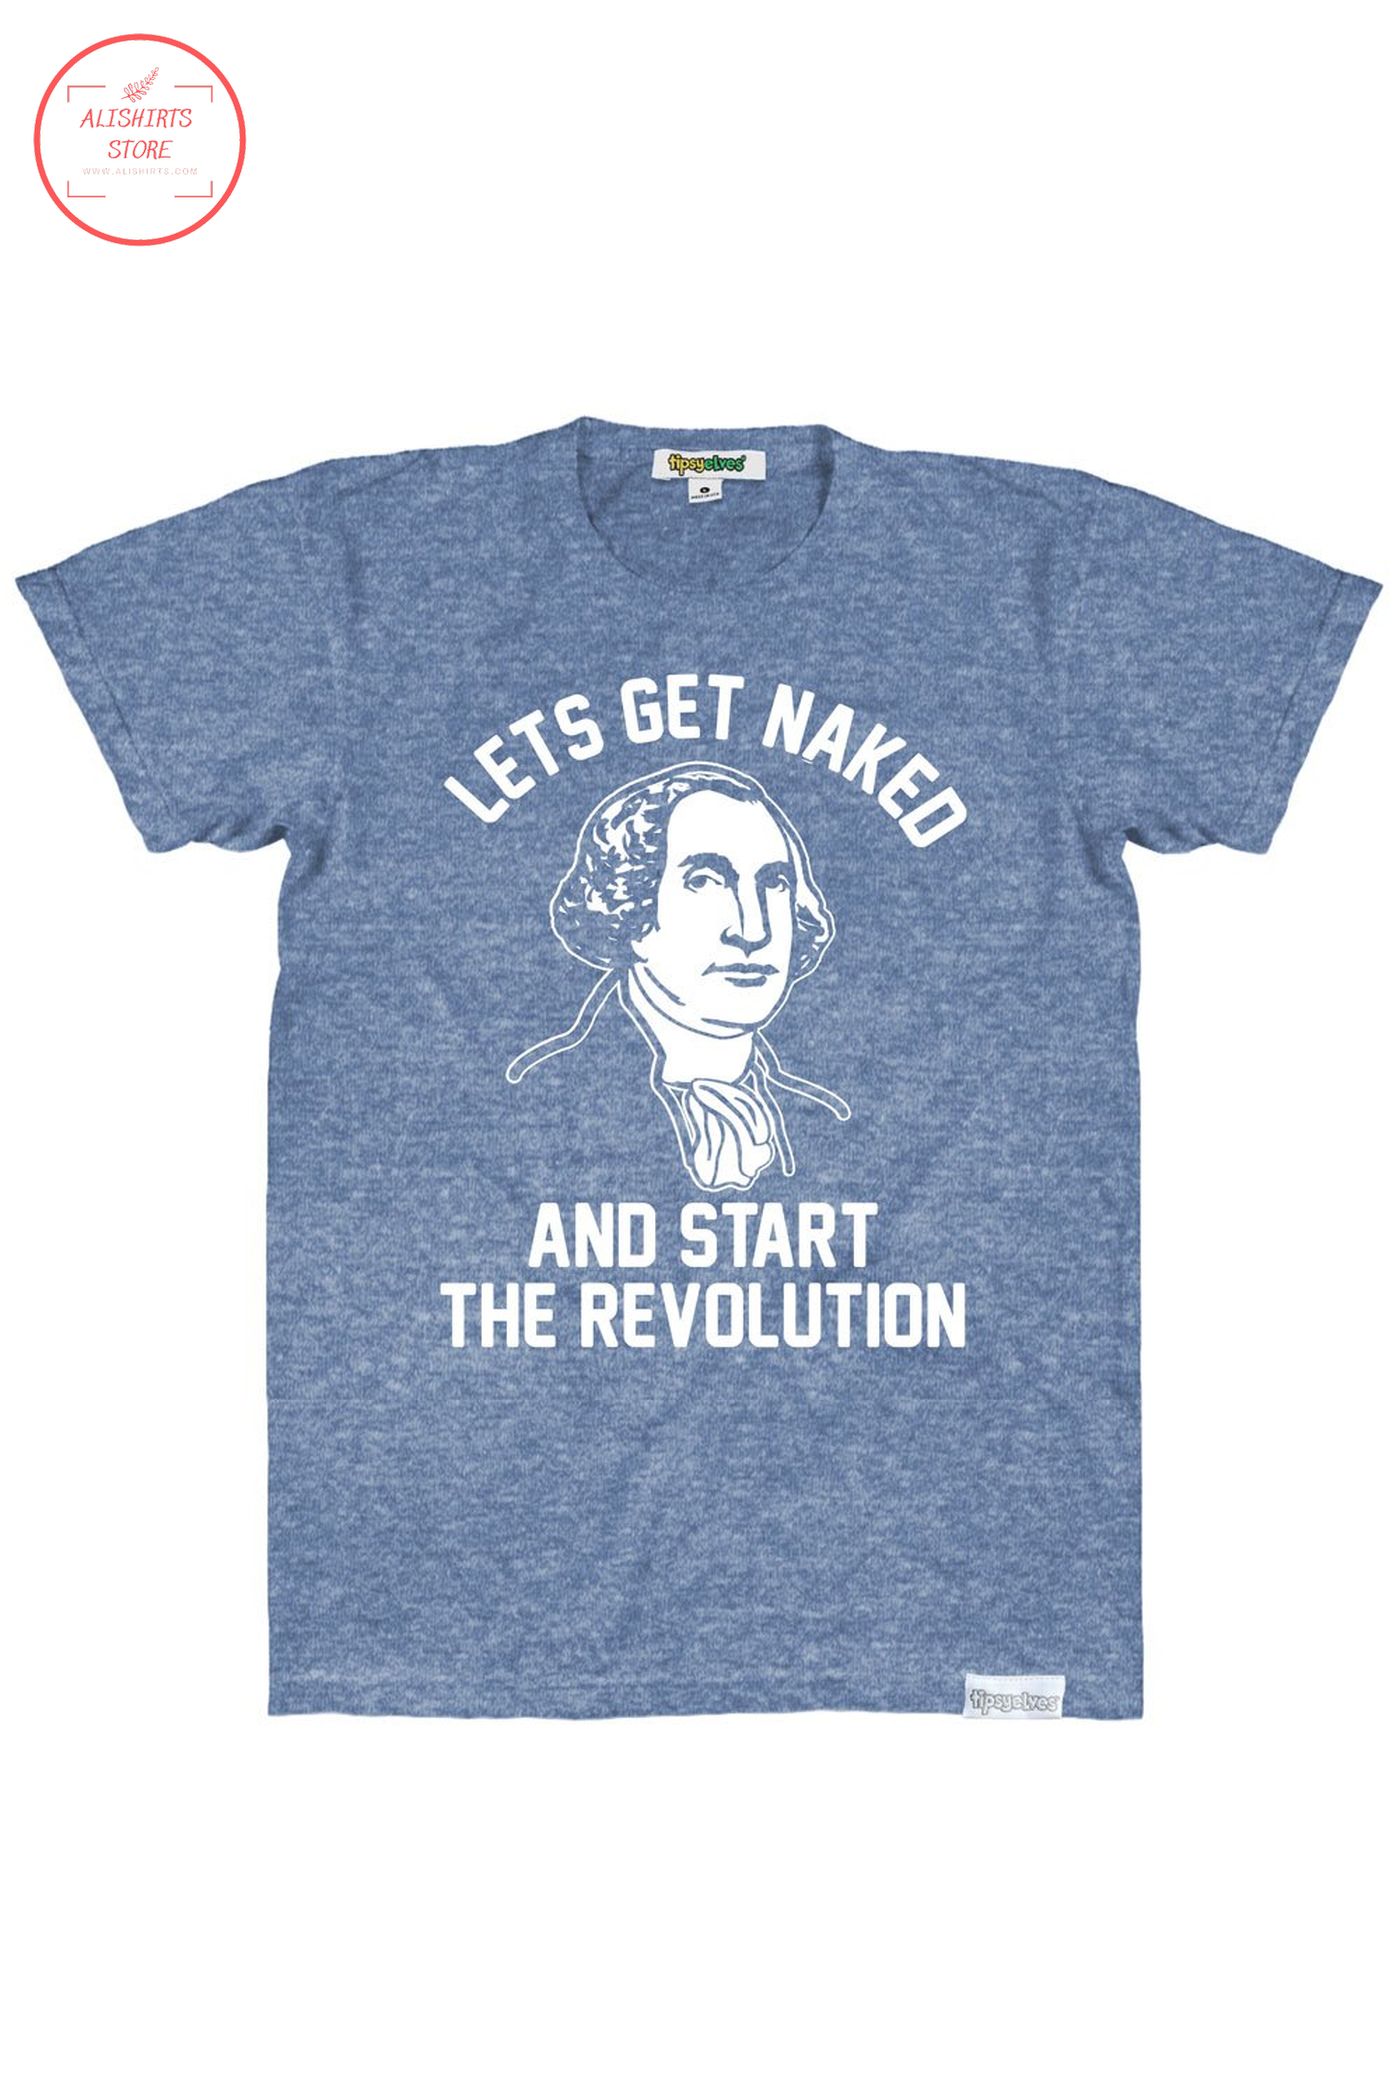 Revolution shirt 4th of July edition